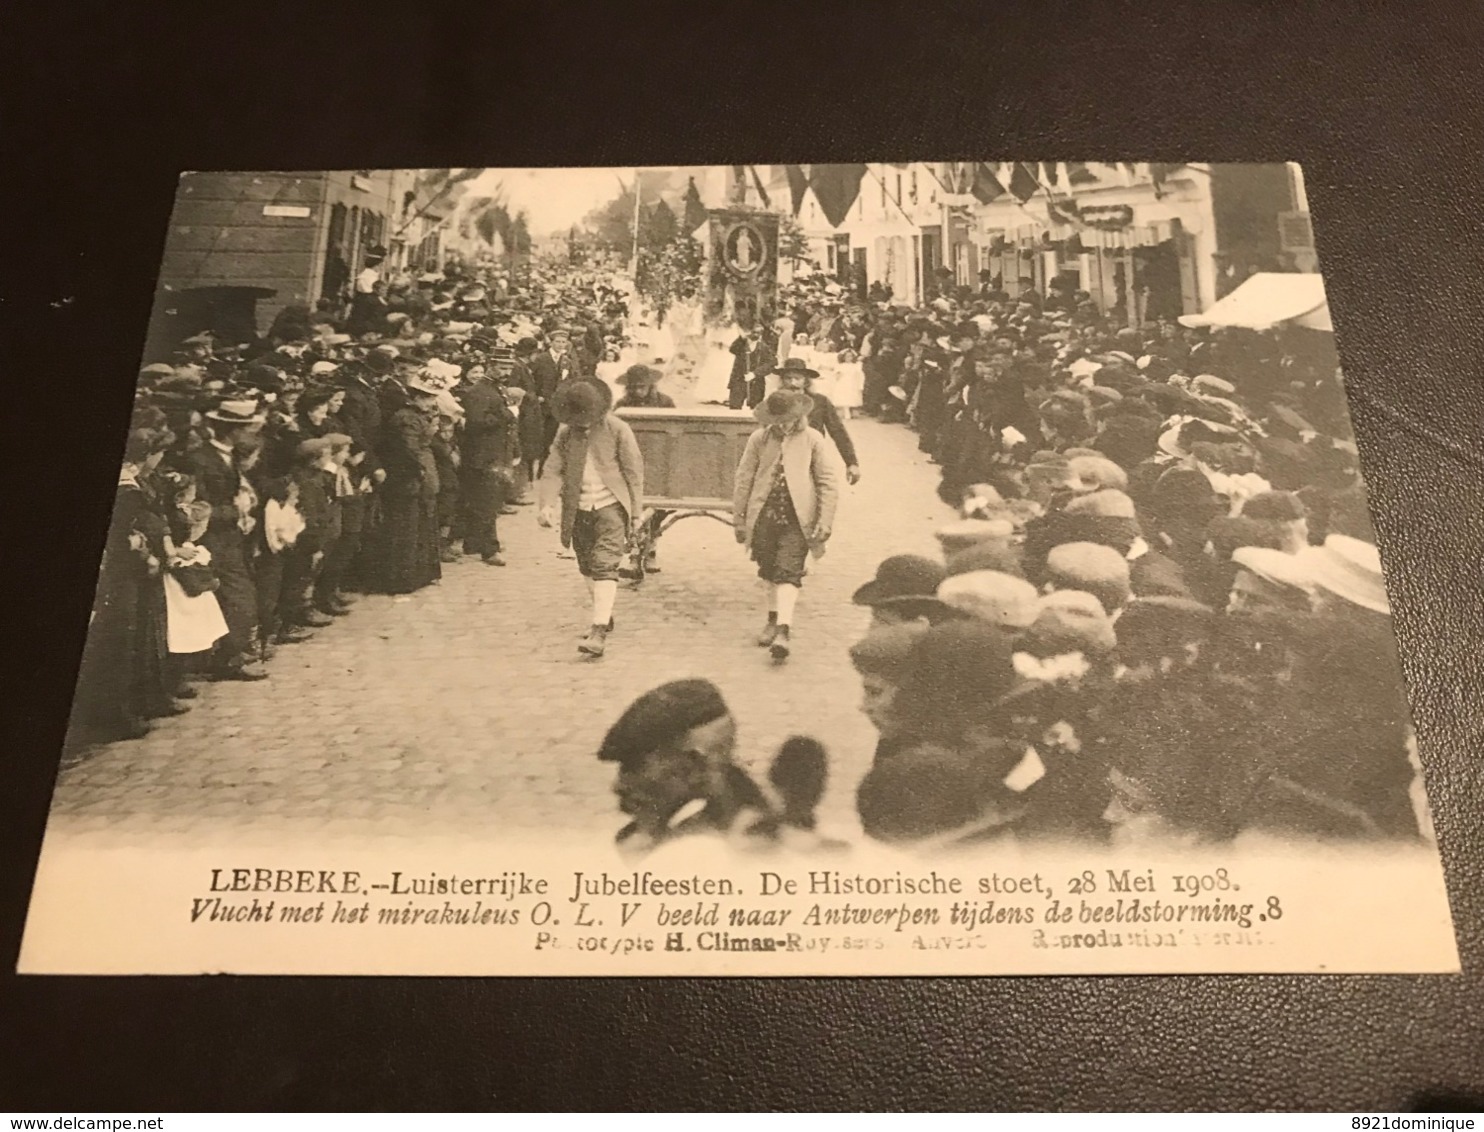 Lebbeke - Luisterrijke Jubelfeesten Stoet 28 Mei 1908 - Photo Climan-Ruyssers - Vlucht Mariabeeld Tijdens  Beeldenstorm - Lebbeke